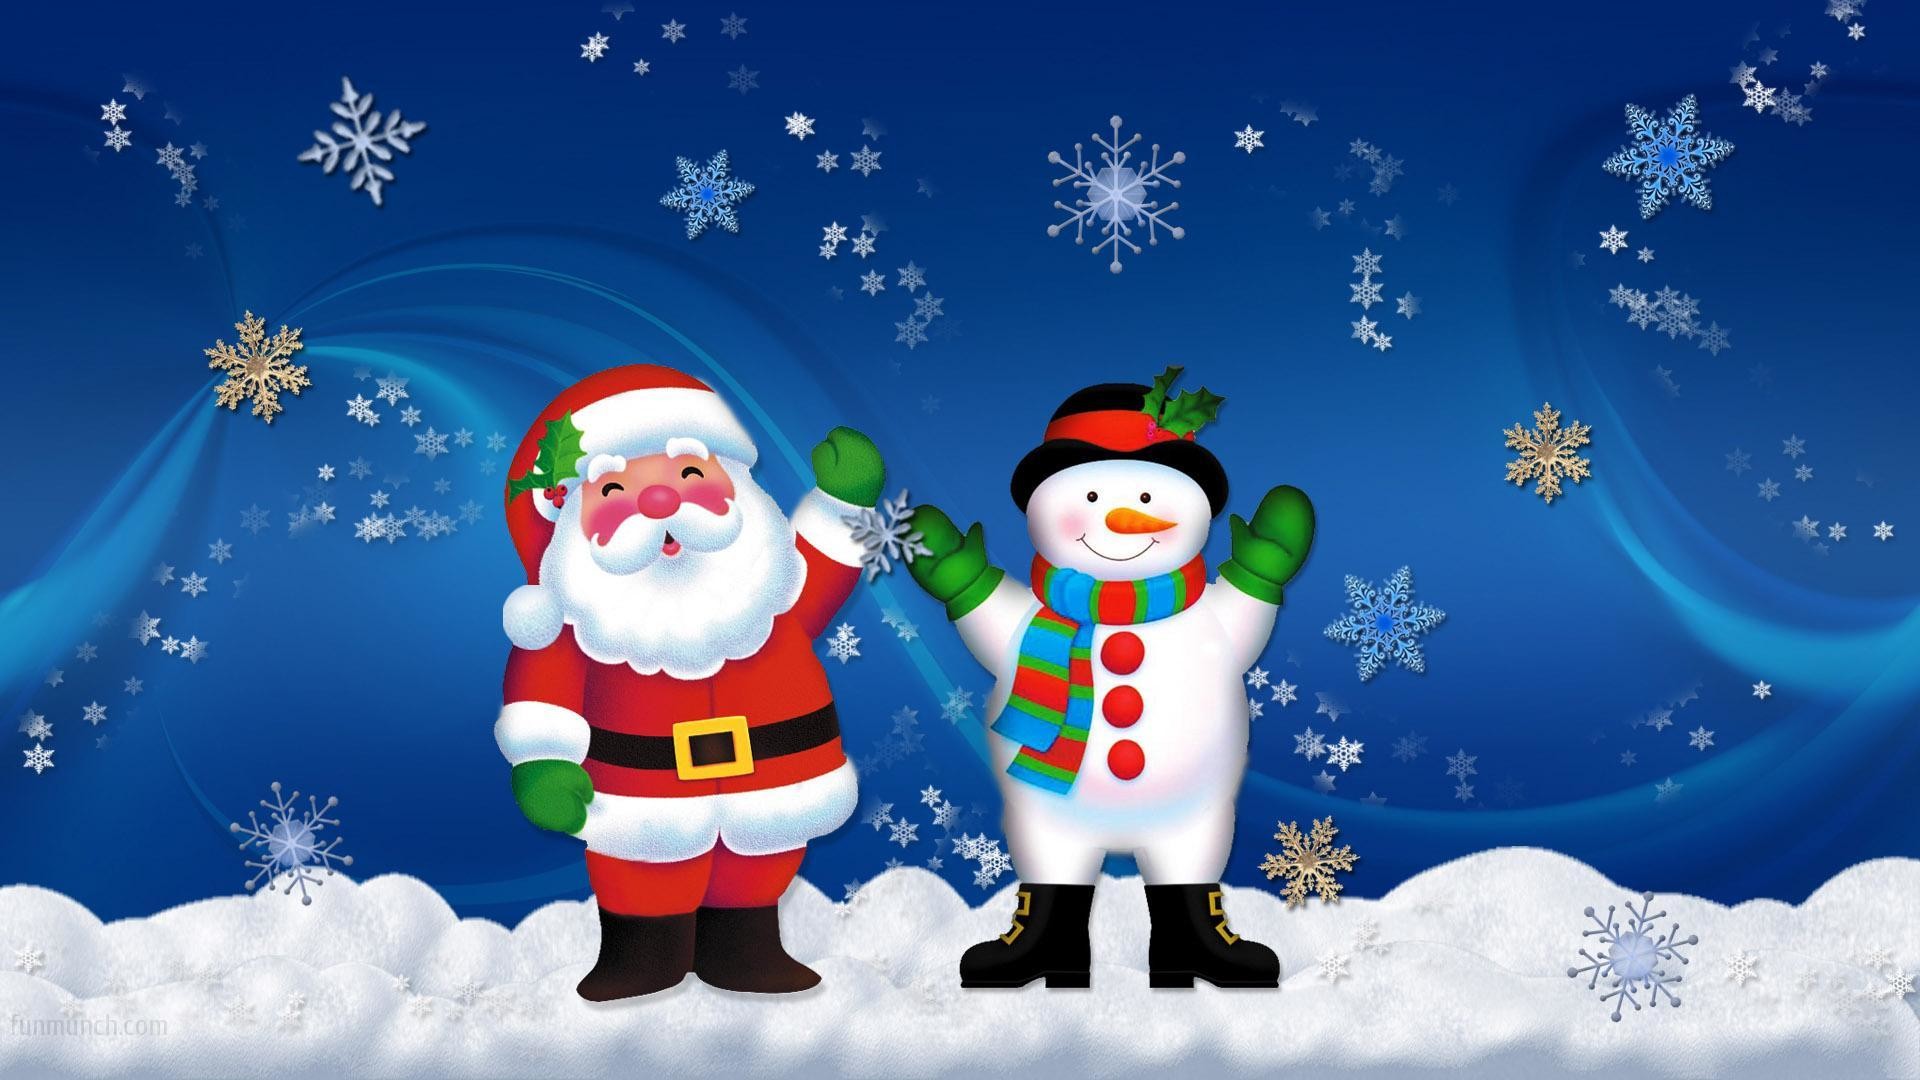 Animated Christmas Desktop Backgrounds, wallpaper, Animated Christmas